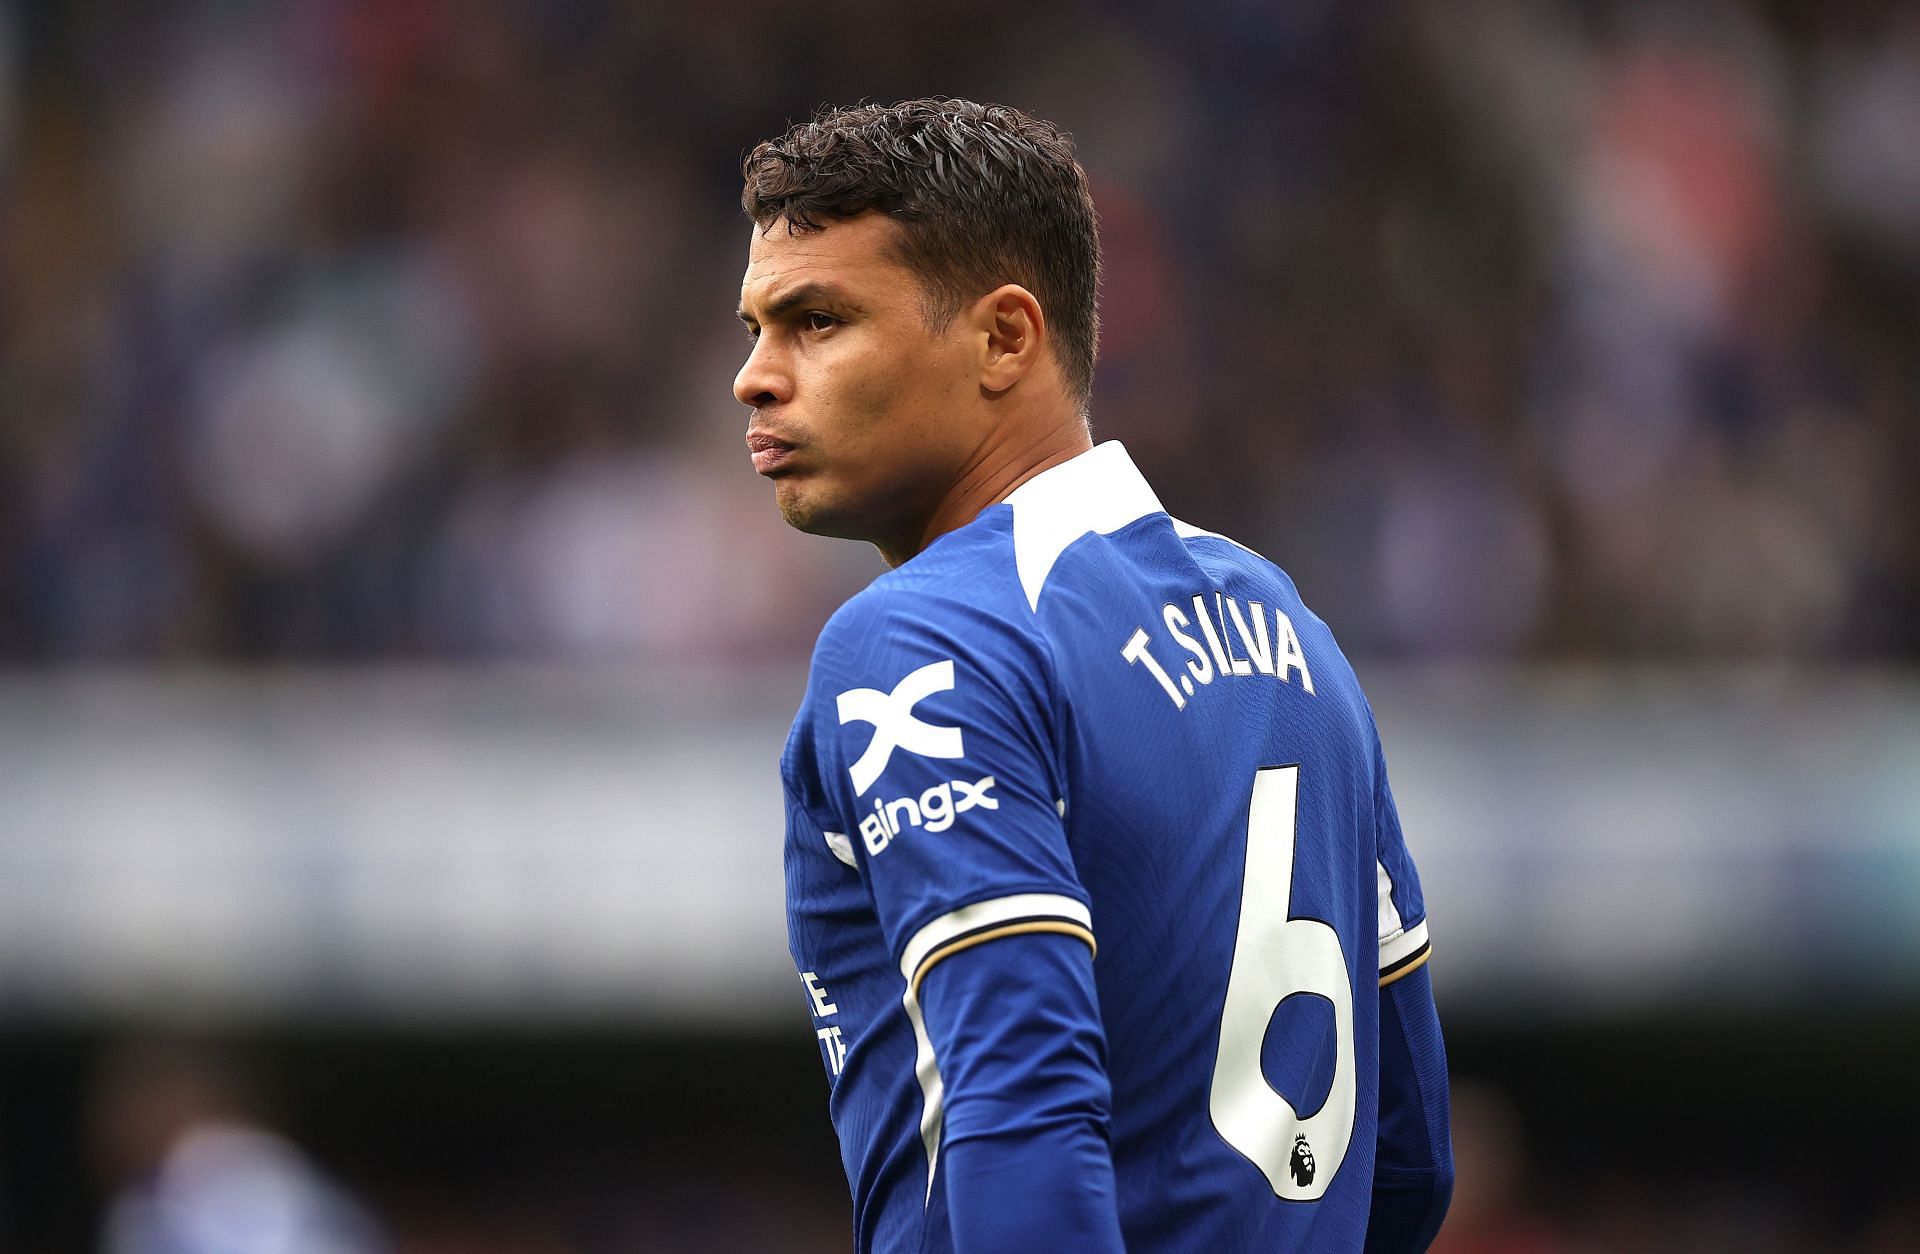 Thiago Silva will leave Stamford Bridge this summer